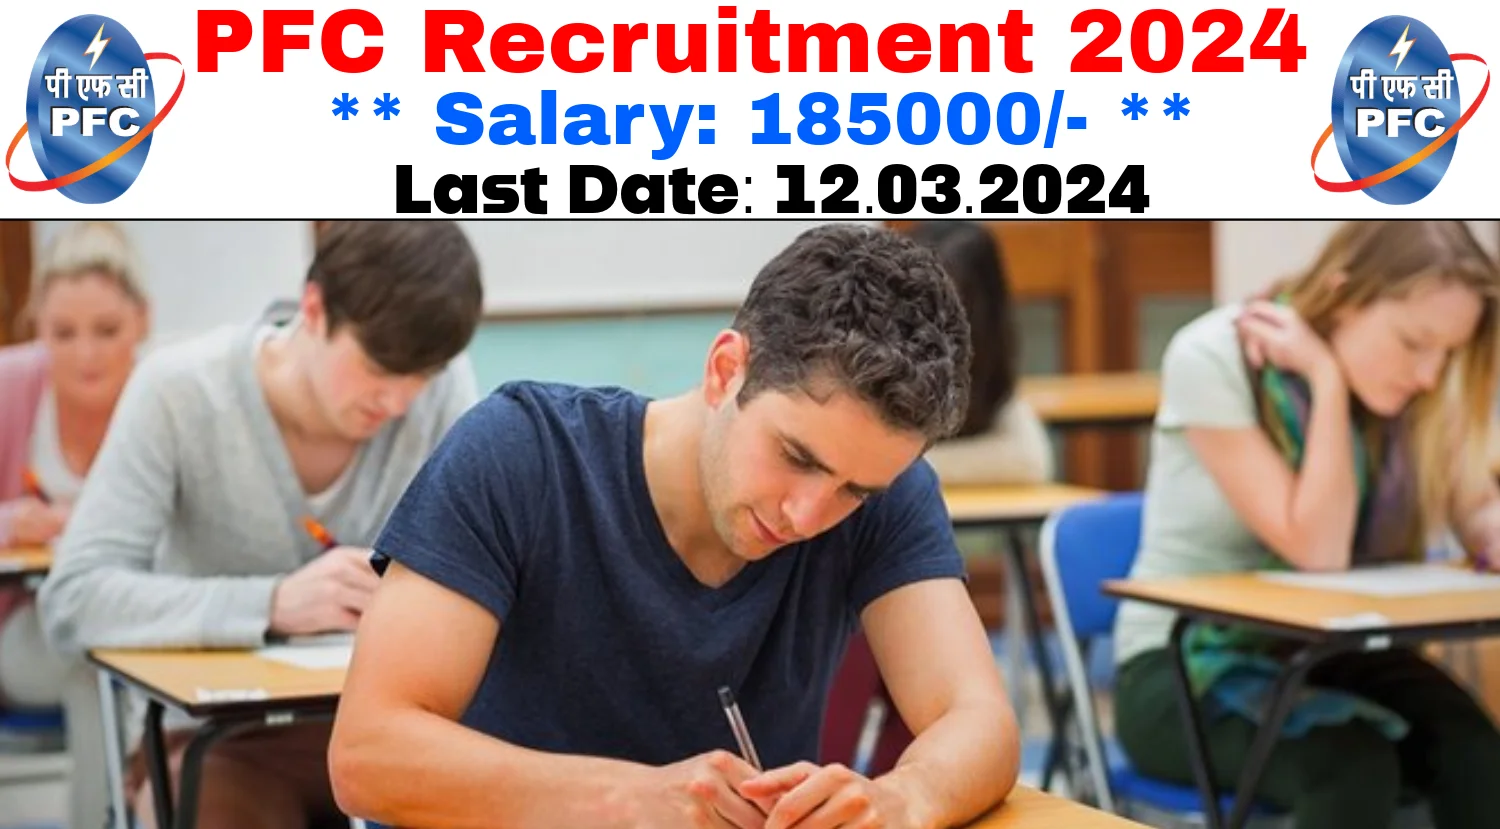 PFC Recruitment 2024